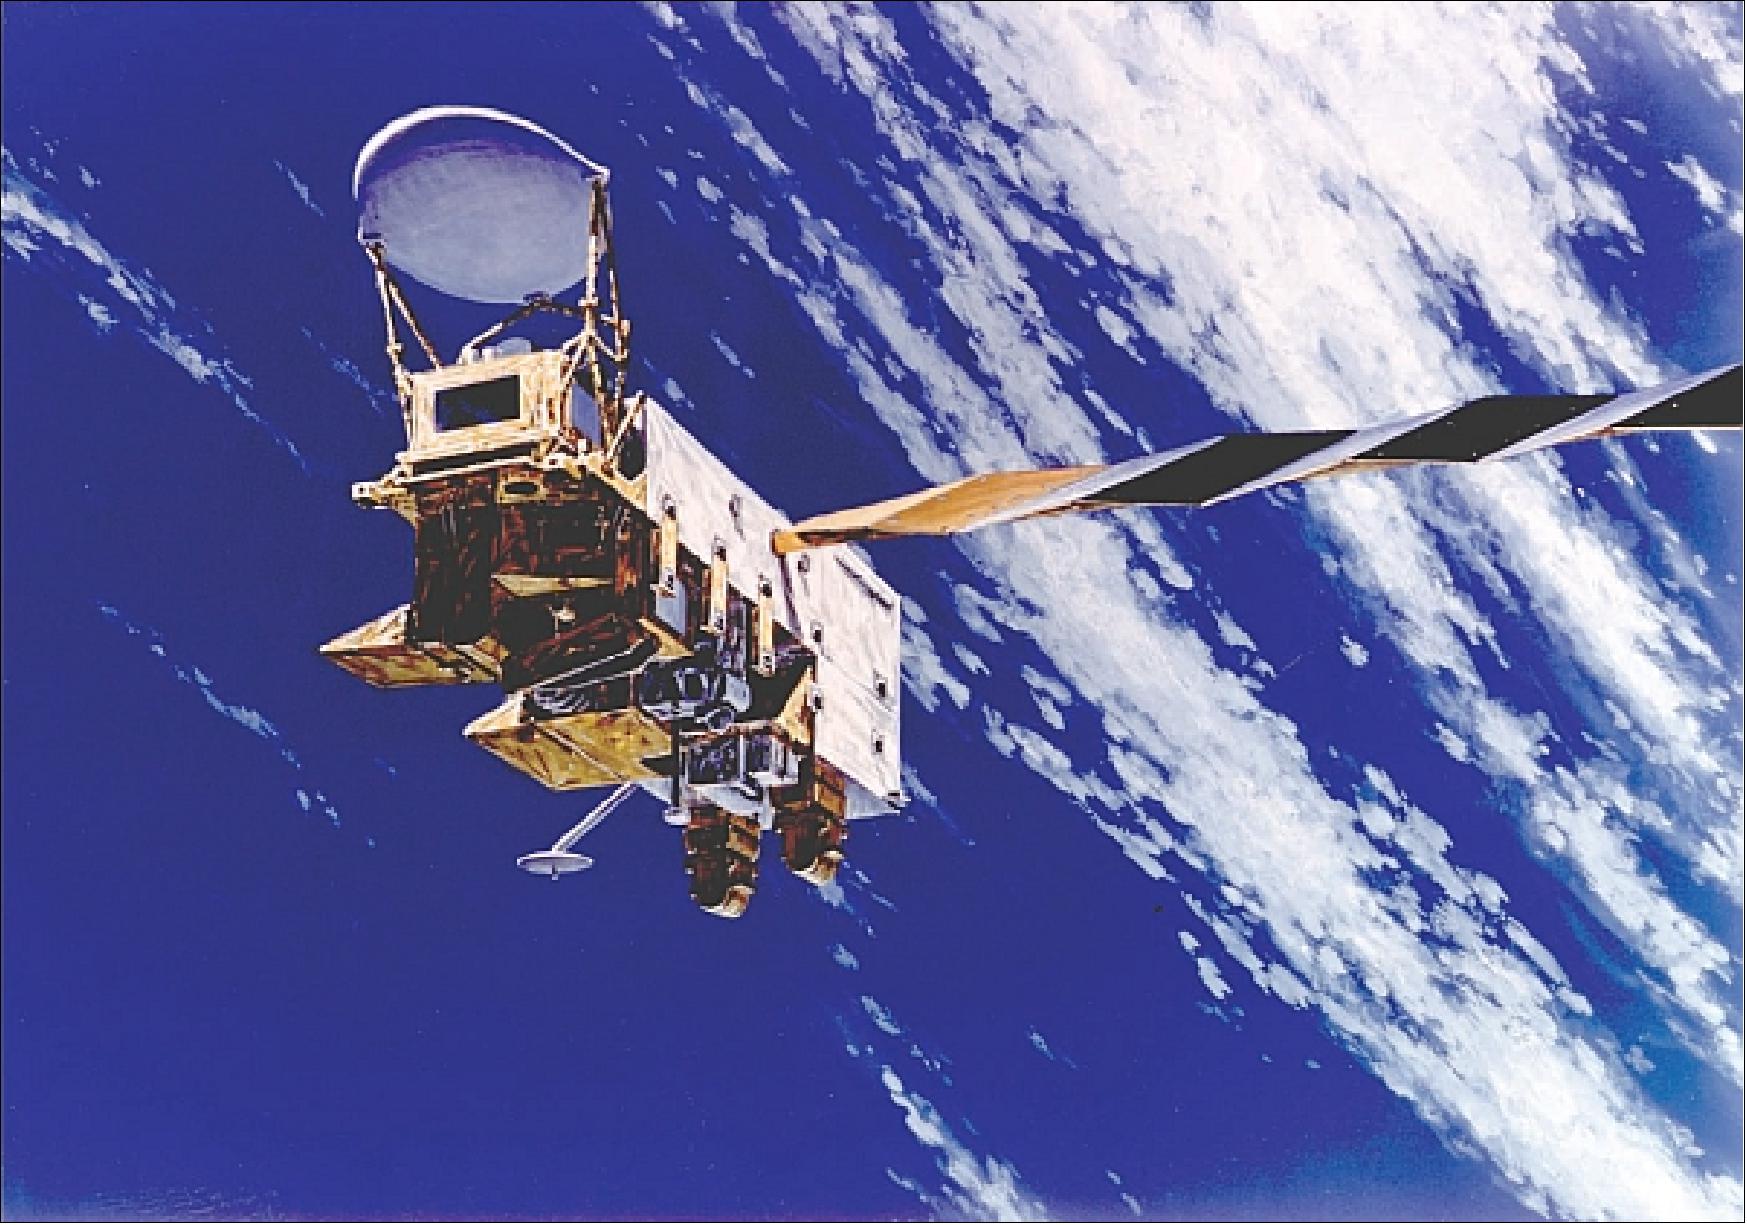 Figure 1: Illustration of the Aqua satellite (image credit: NASA)